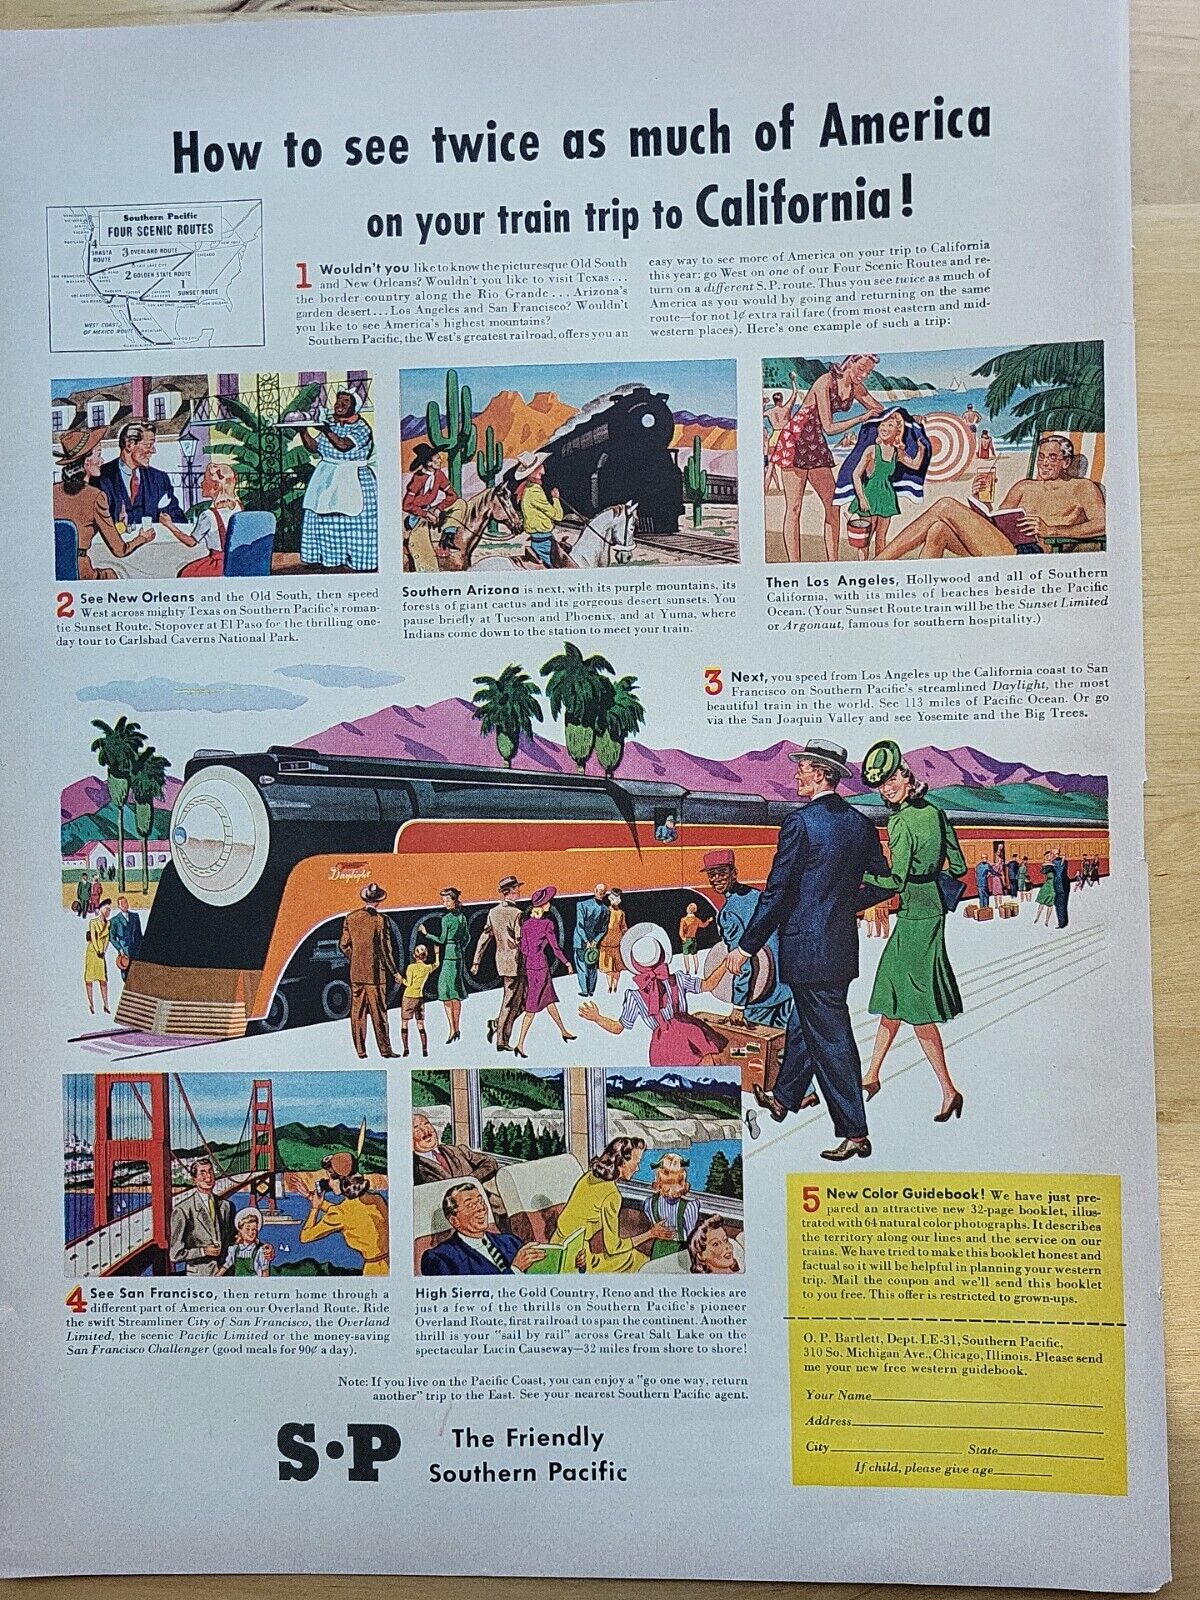 1941 Southern Pacific Railroad California Train Print Advertising Life Animated